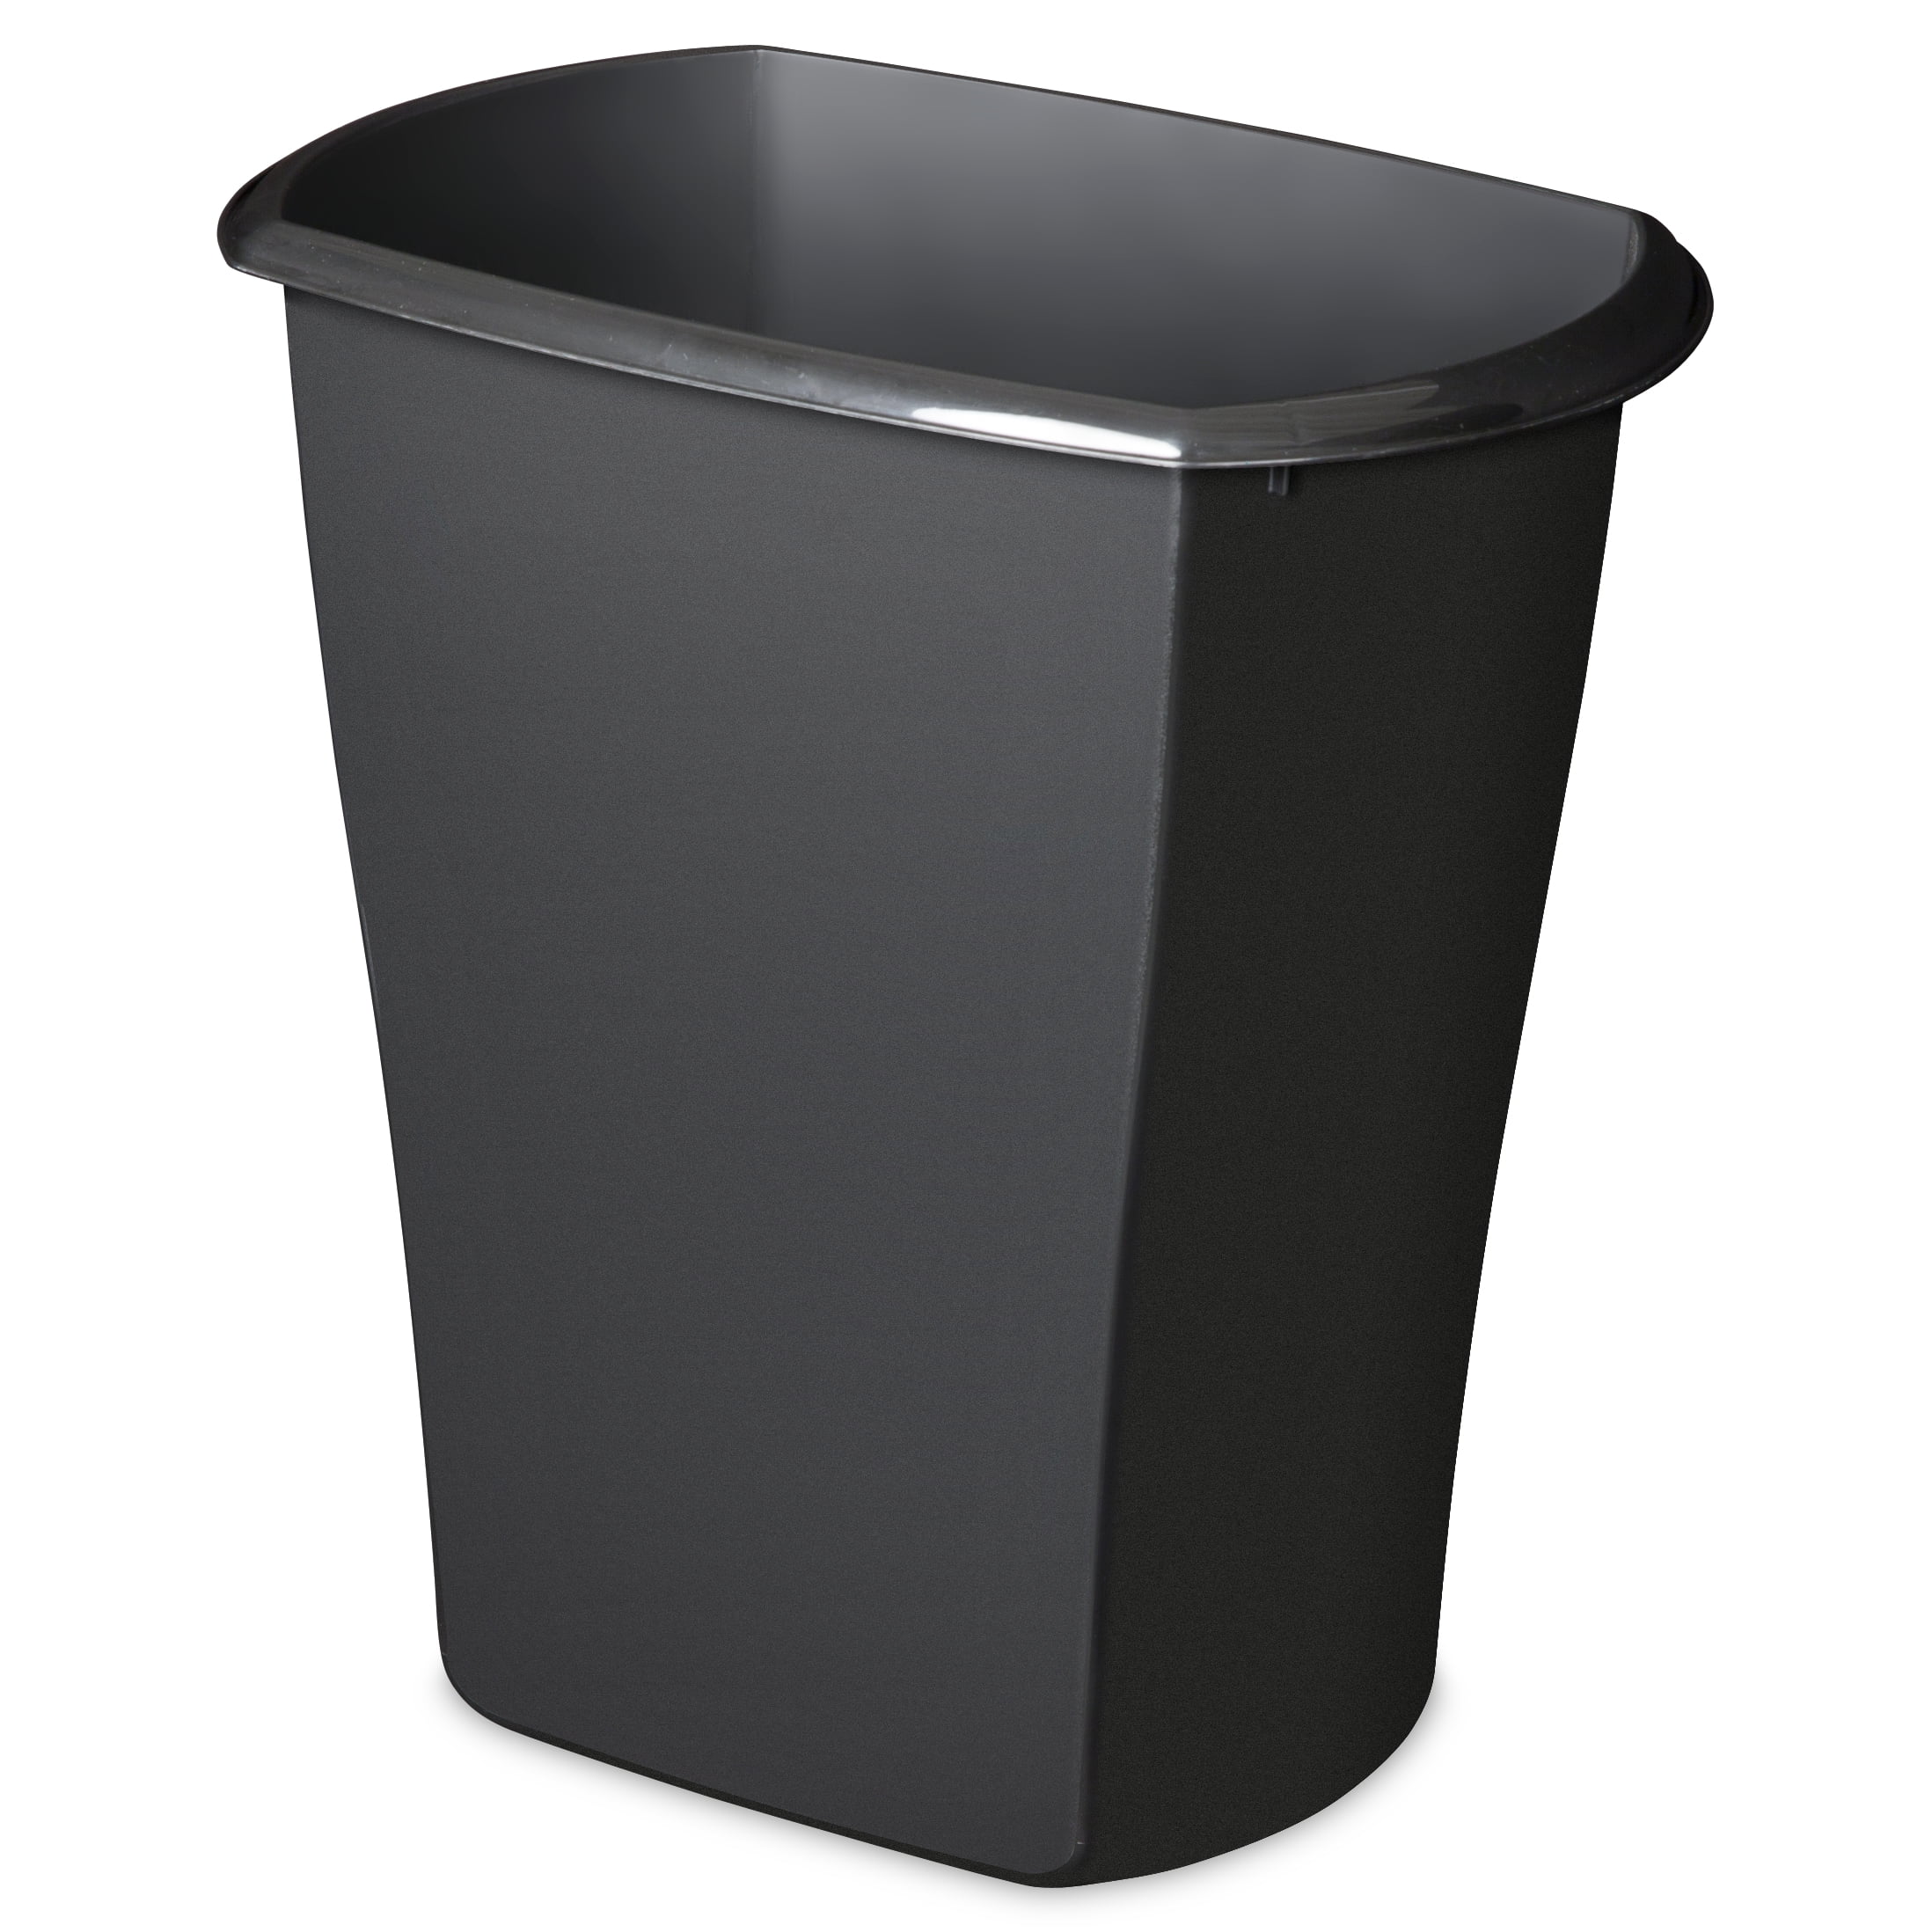 Sterilite Trash Can, Plastic Bathroom or Office Trash Can, 5.5 Gallon, Black